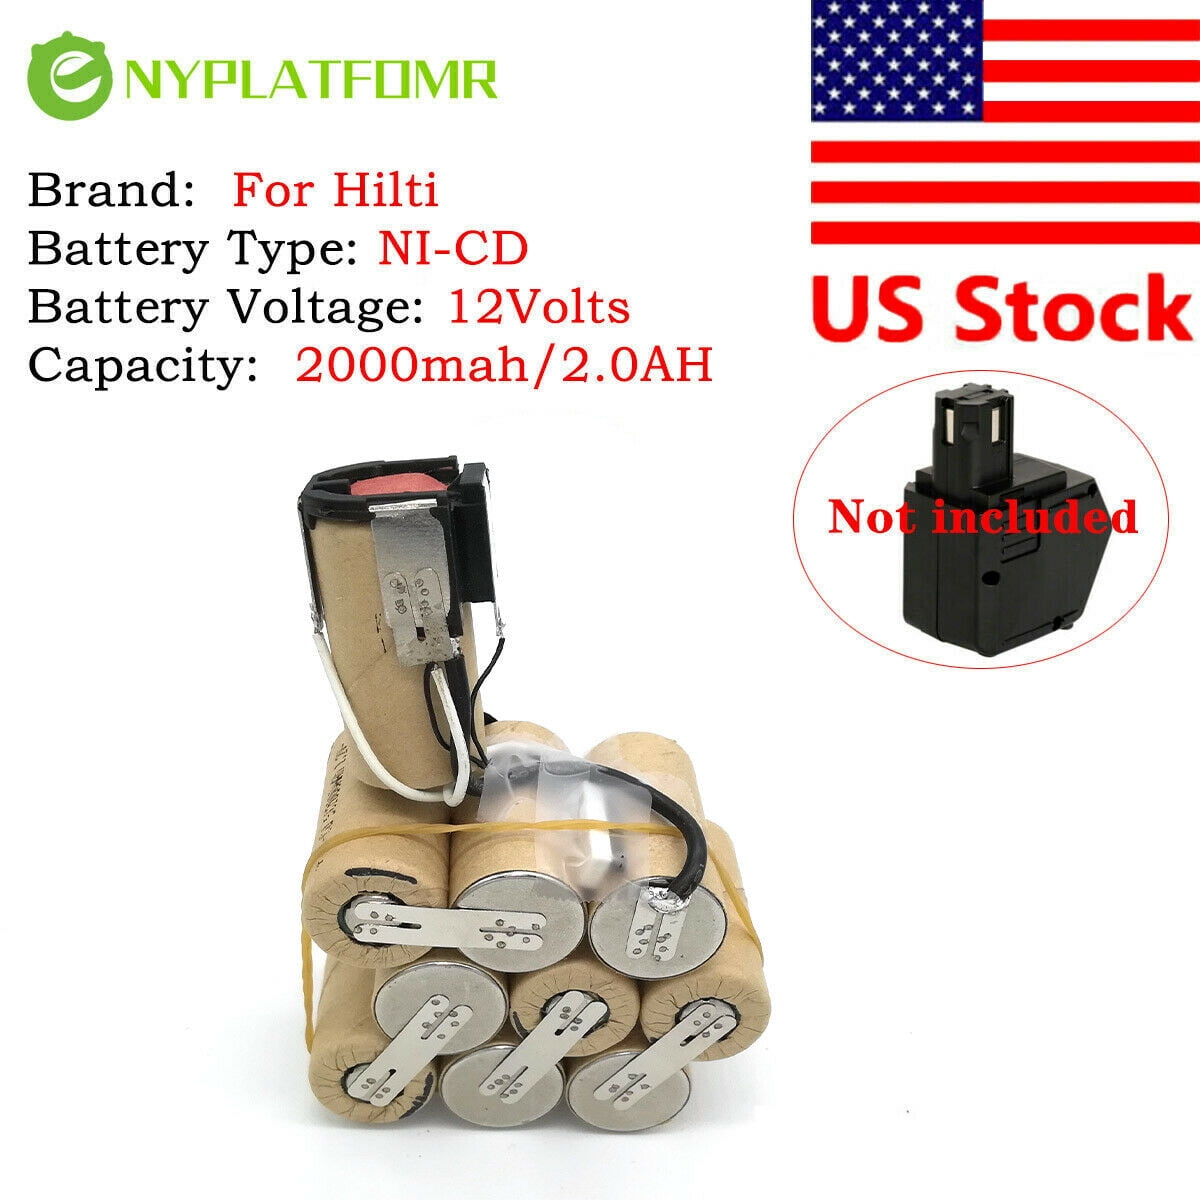 NEW Battery Pack For Hilti 36V 2.0AH NI-CD  Battery HIGH POWER REBUILD US 